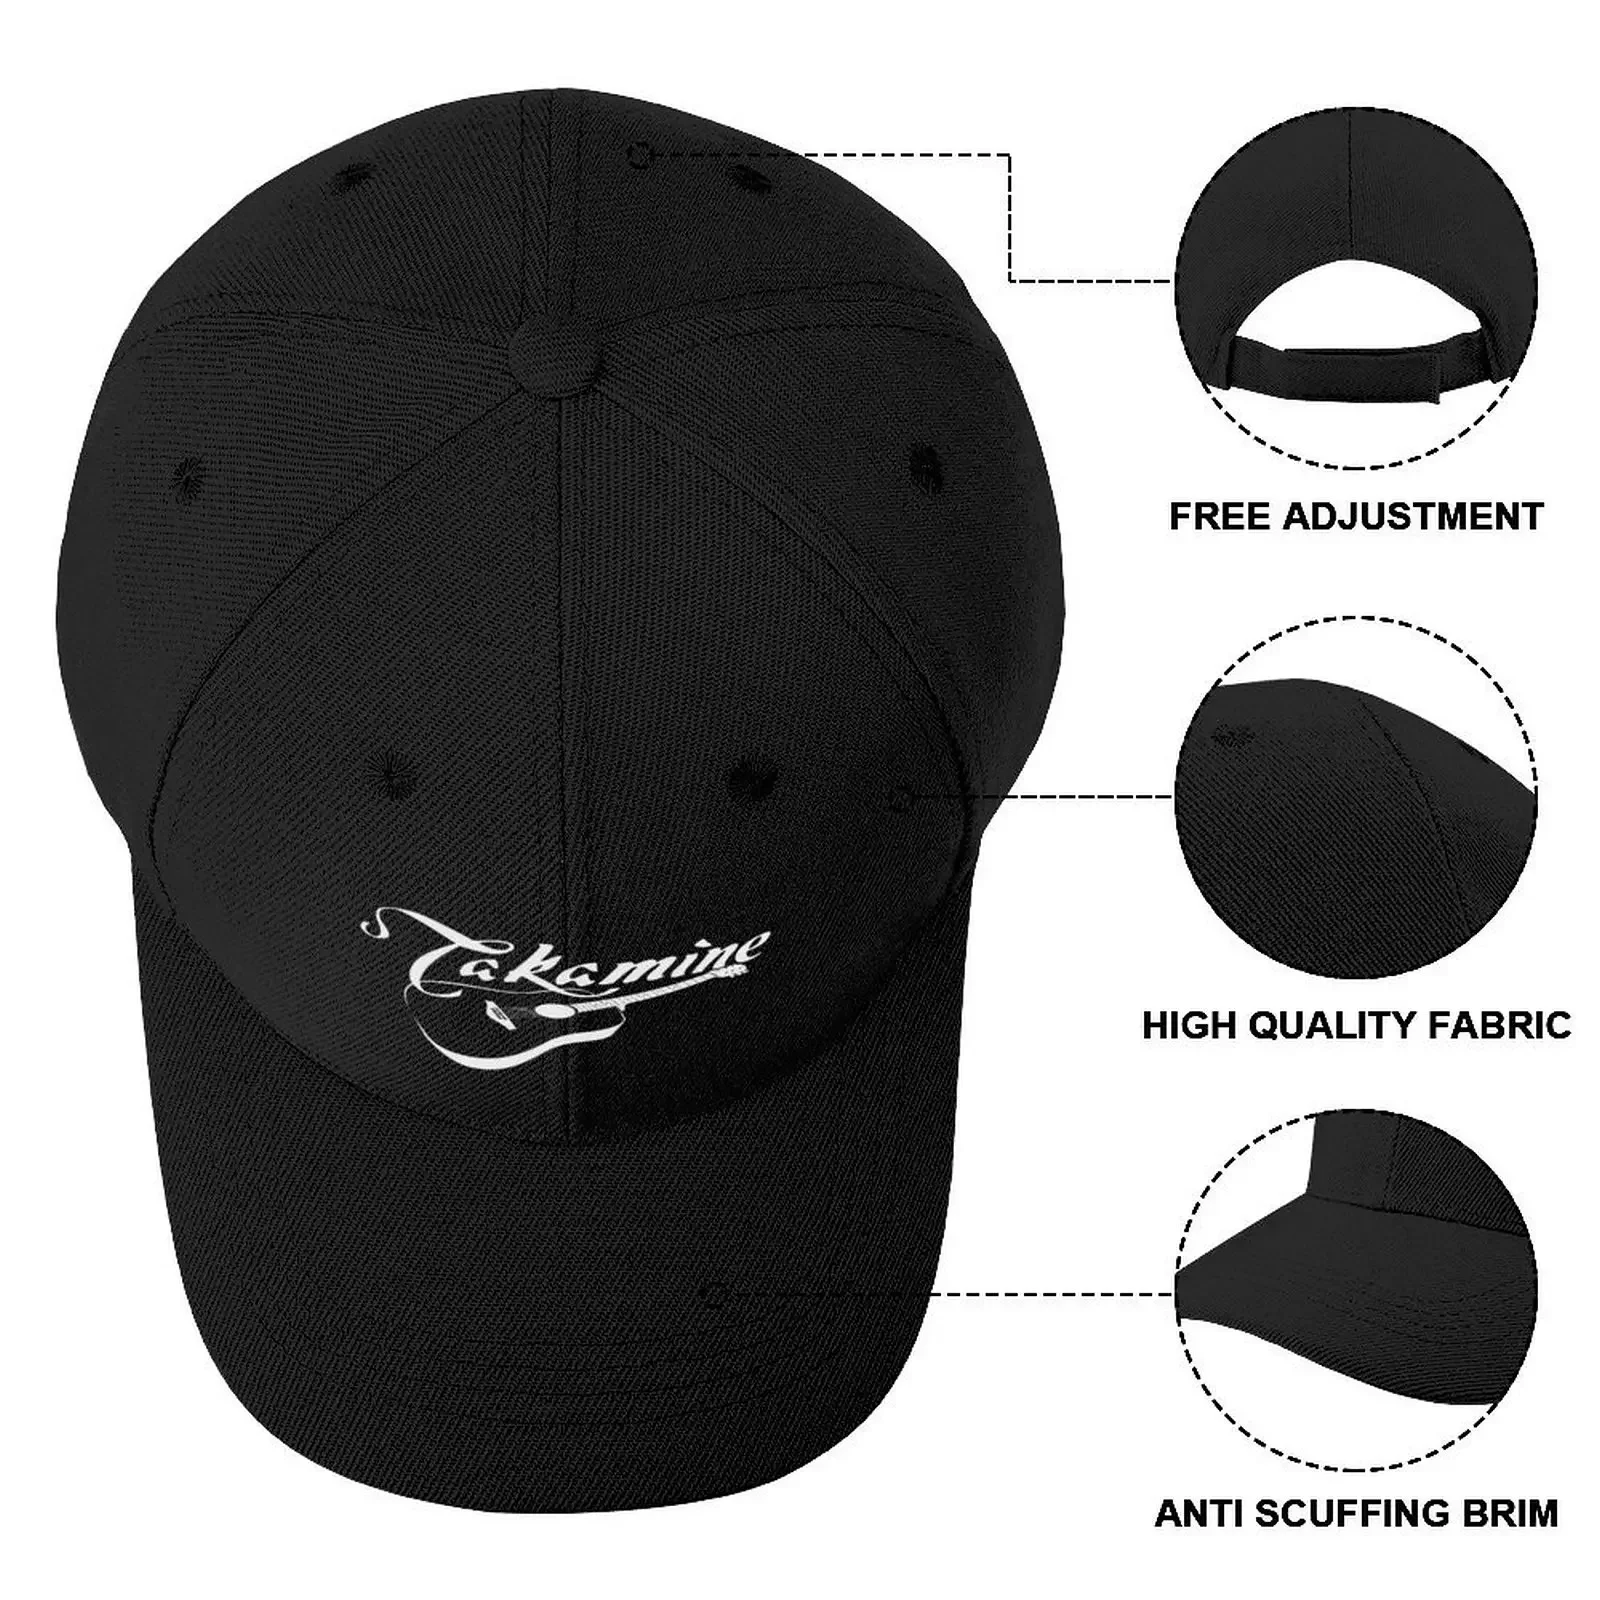 Takamine Guitars Baseball Cap New In The Hat Brand Man cap hard hat Men's Women's